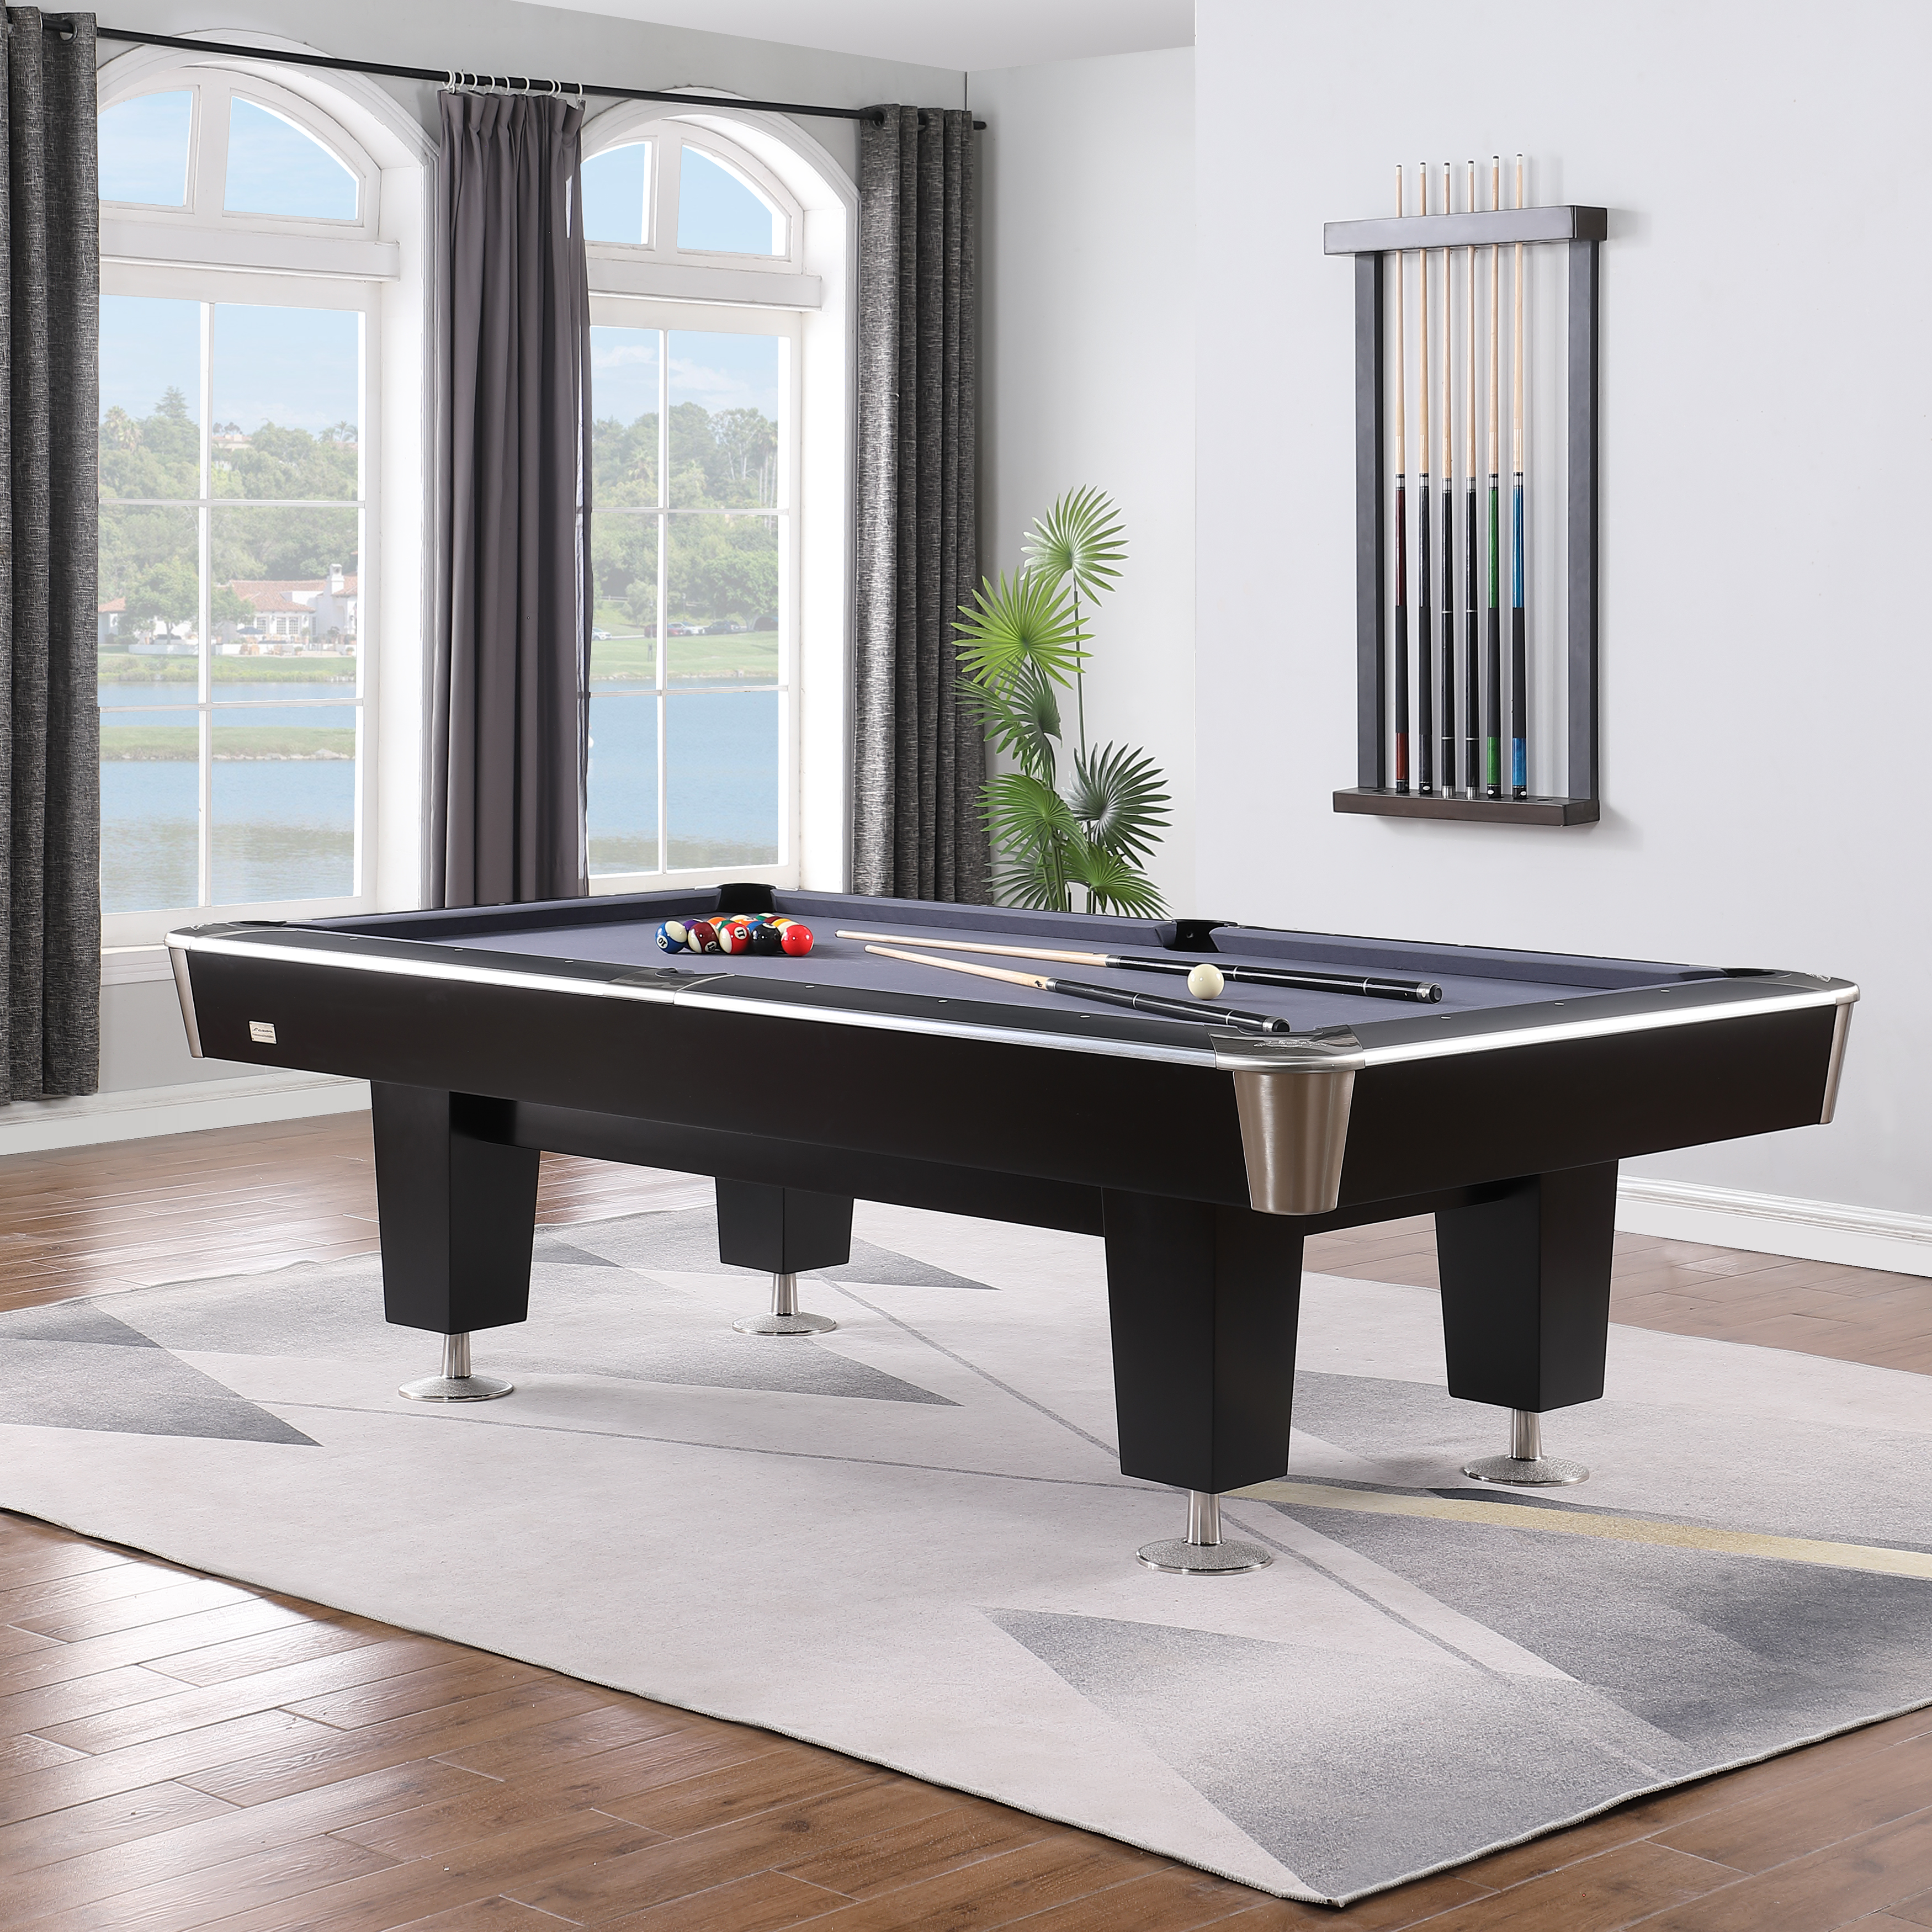 SC0110-PR: Snookertafel Lexor X-treme II Pro-series EPBF pockets, black-RVS  #2